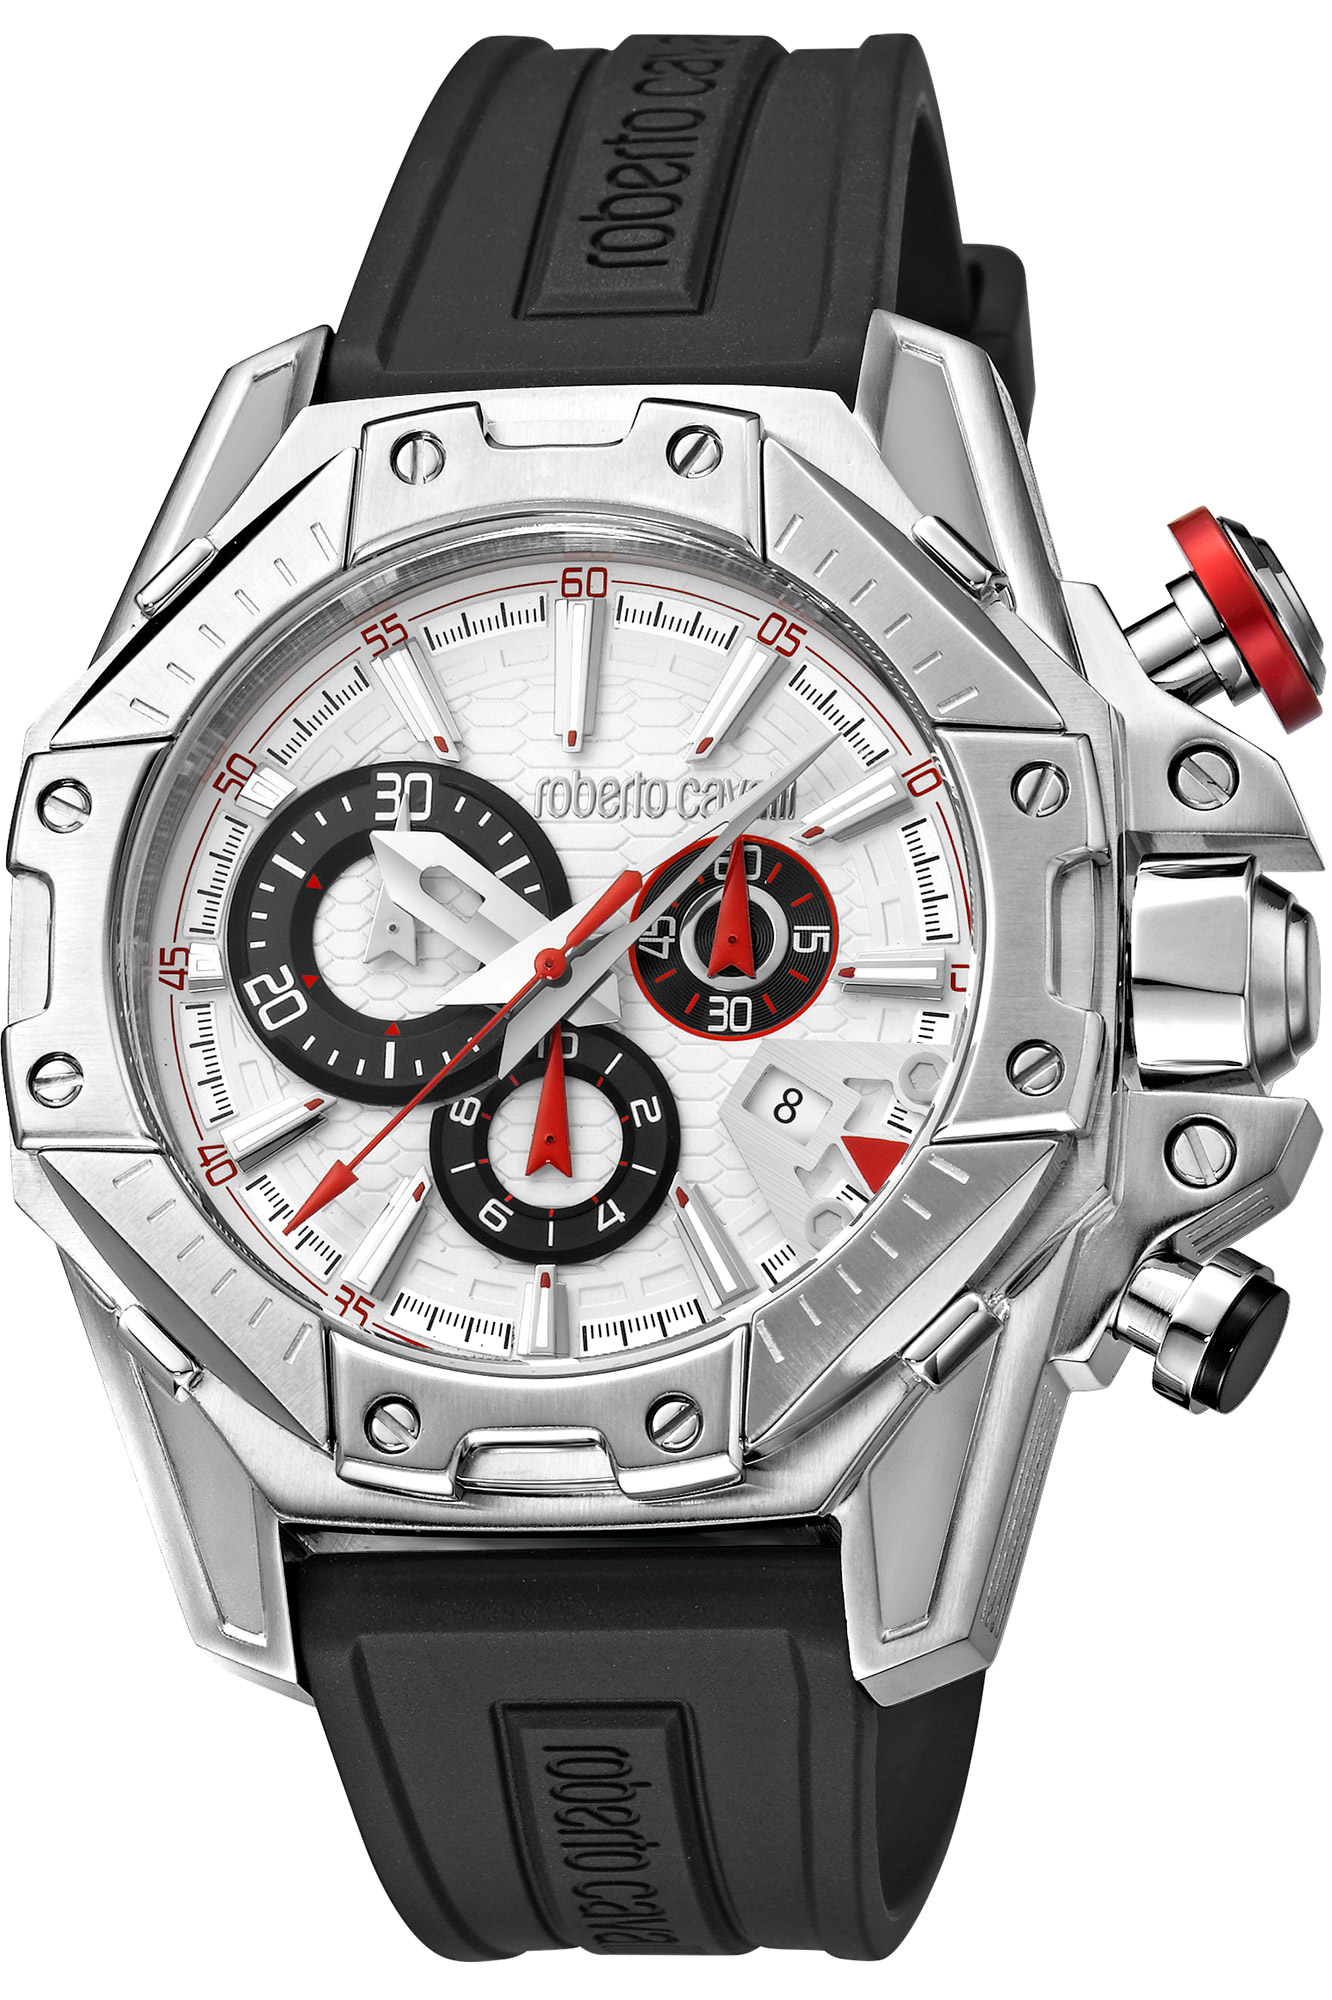 Reloj Roberto Cavalli by Franck Muller rv1g057p0011